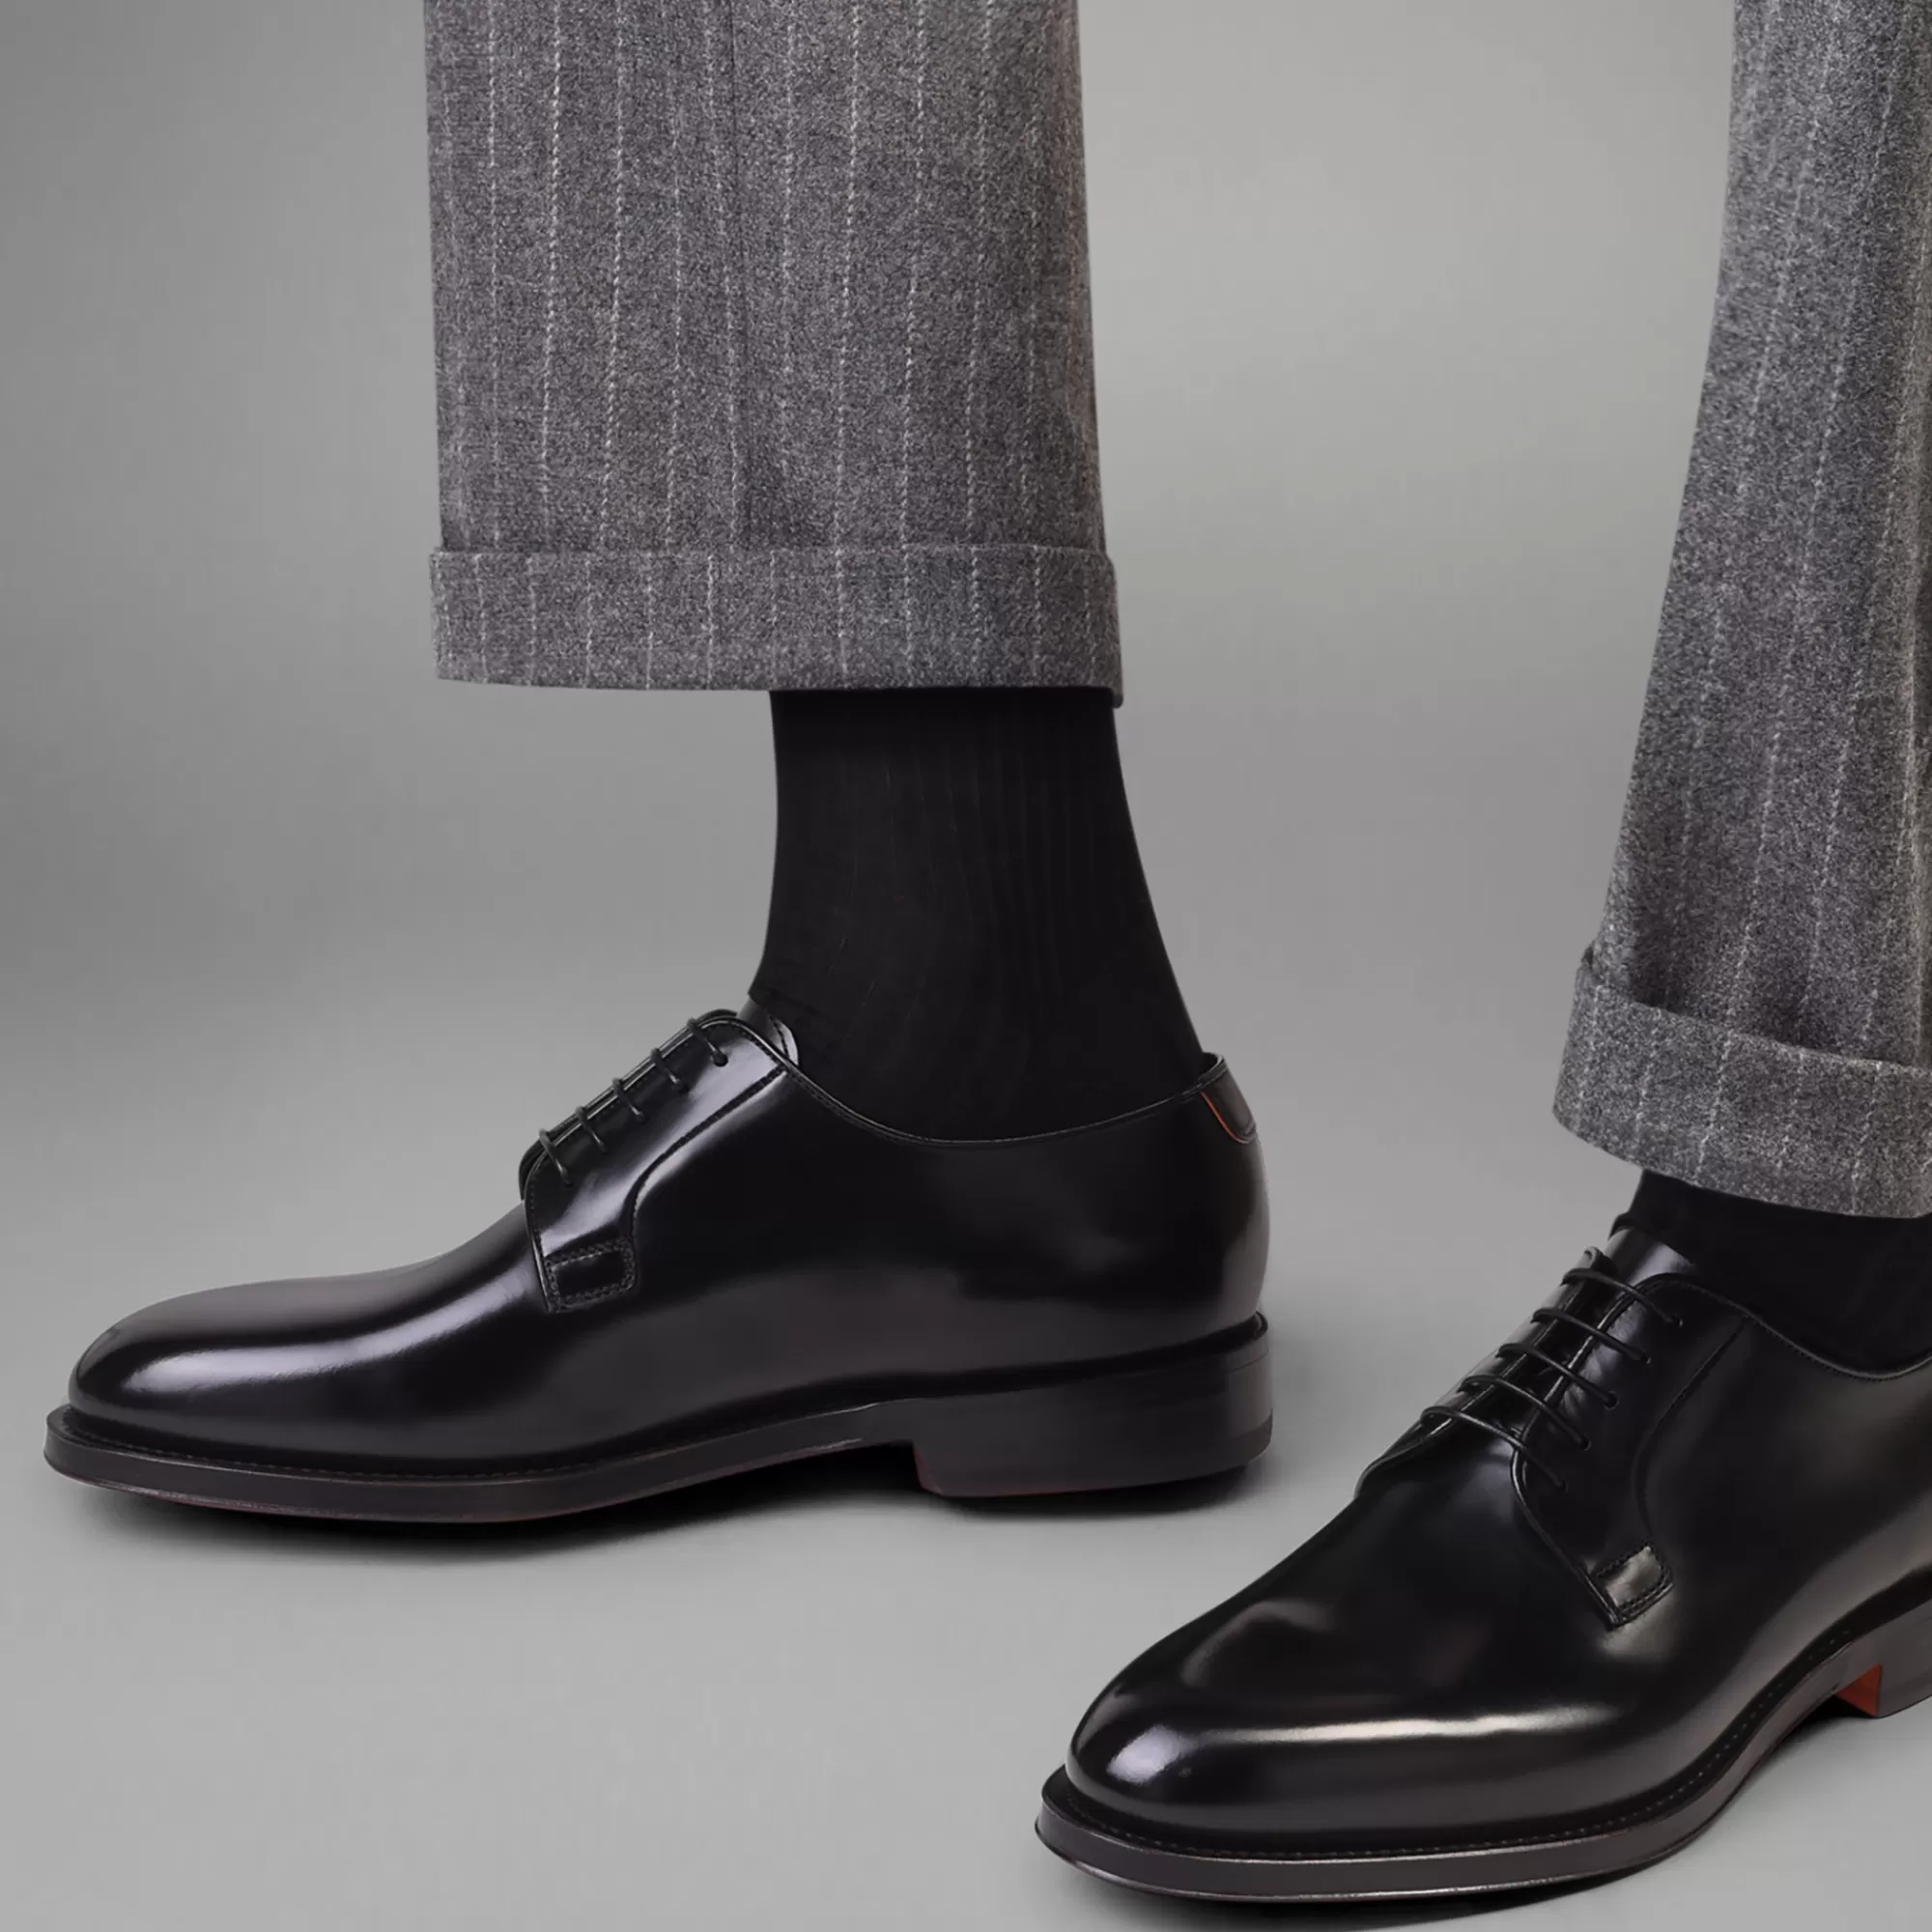 Best Sale Stringata derby da uomo in pelle anticata nera | SUGGERIMENTI Vedi tutte le calzature | Stringate